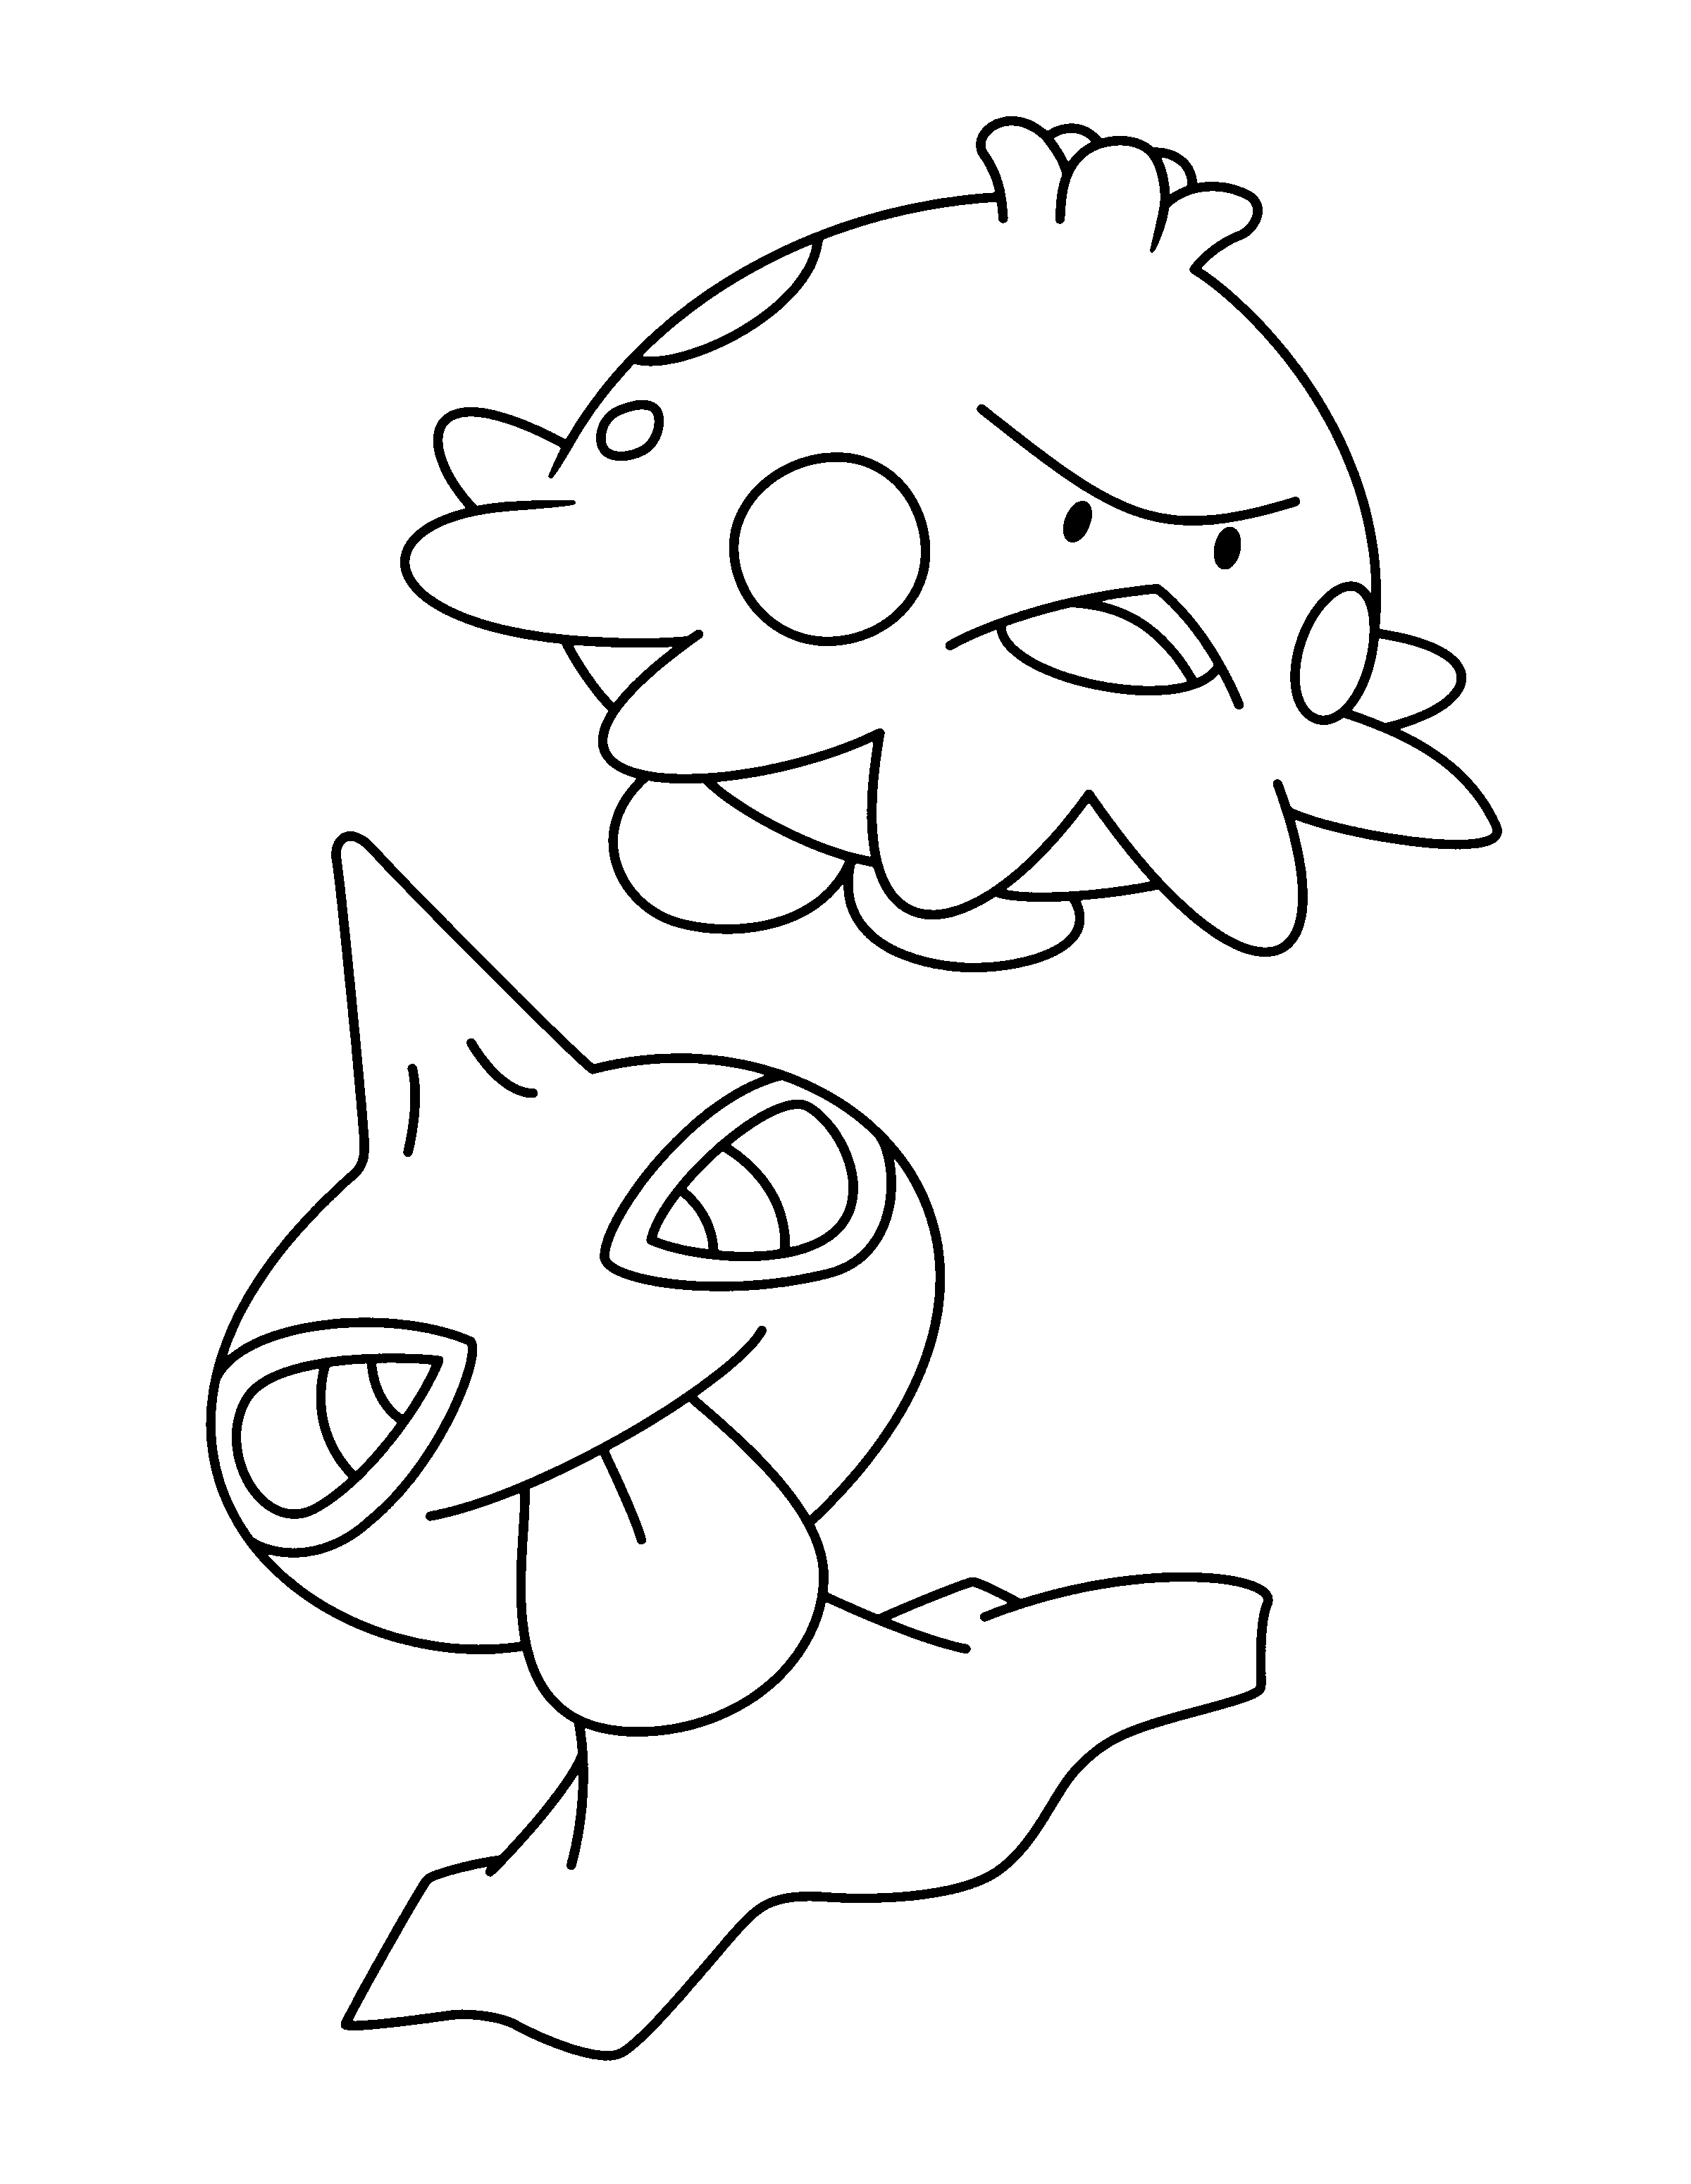 Pokemon advanced ausmalbilder